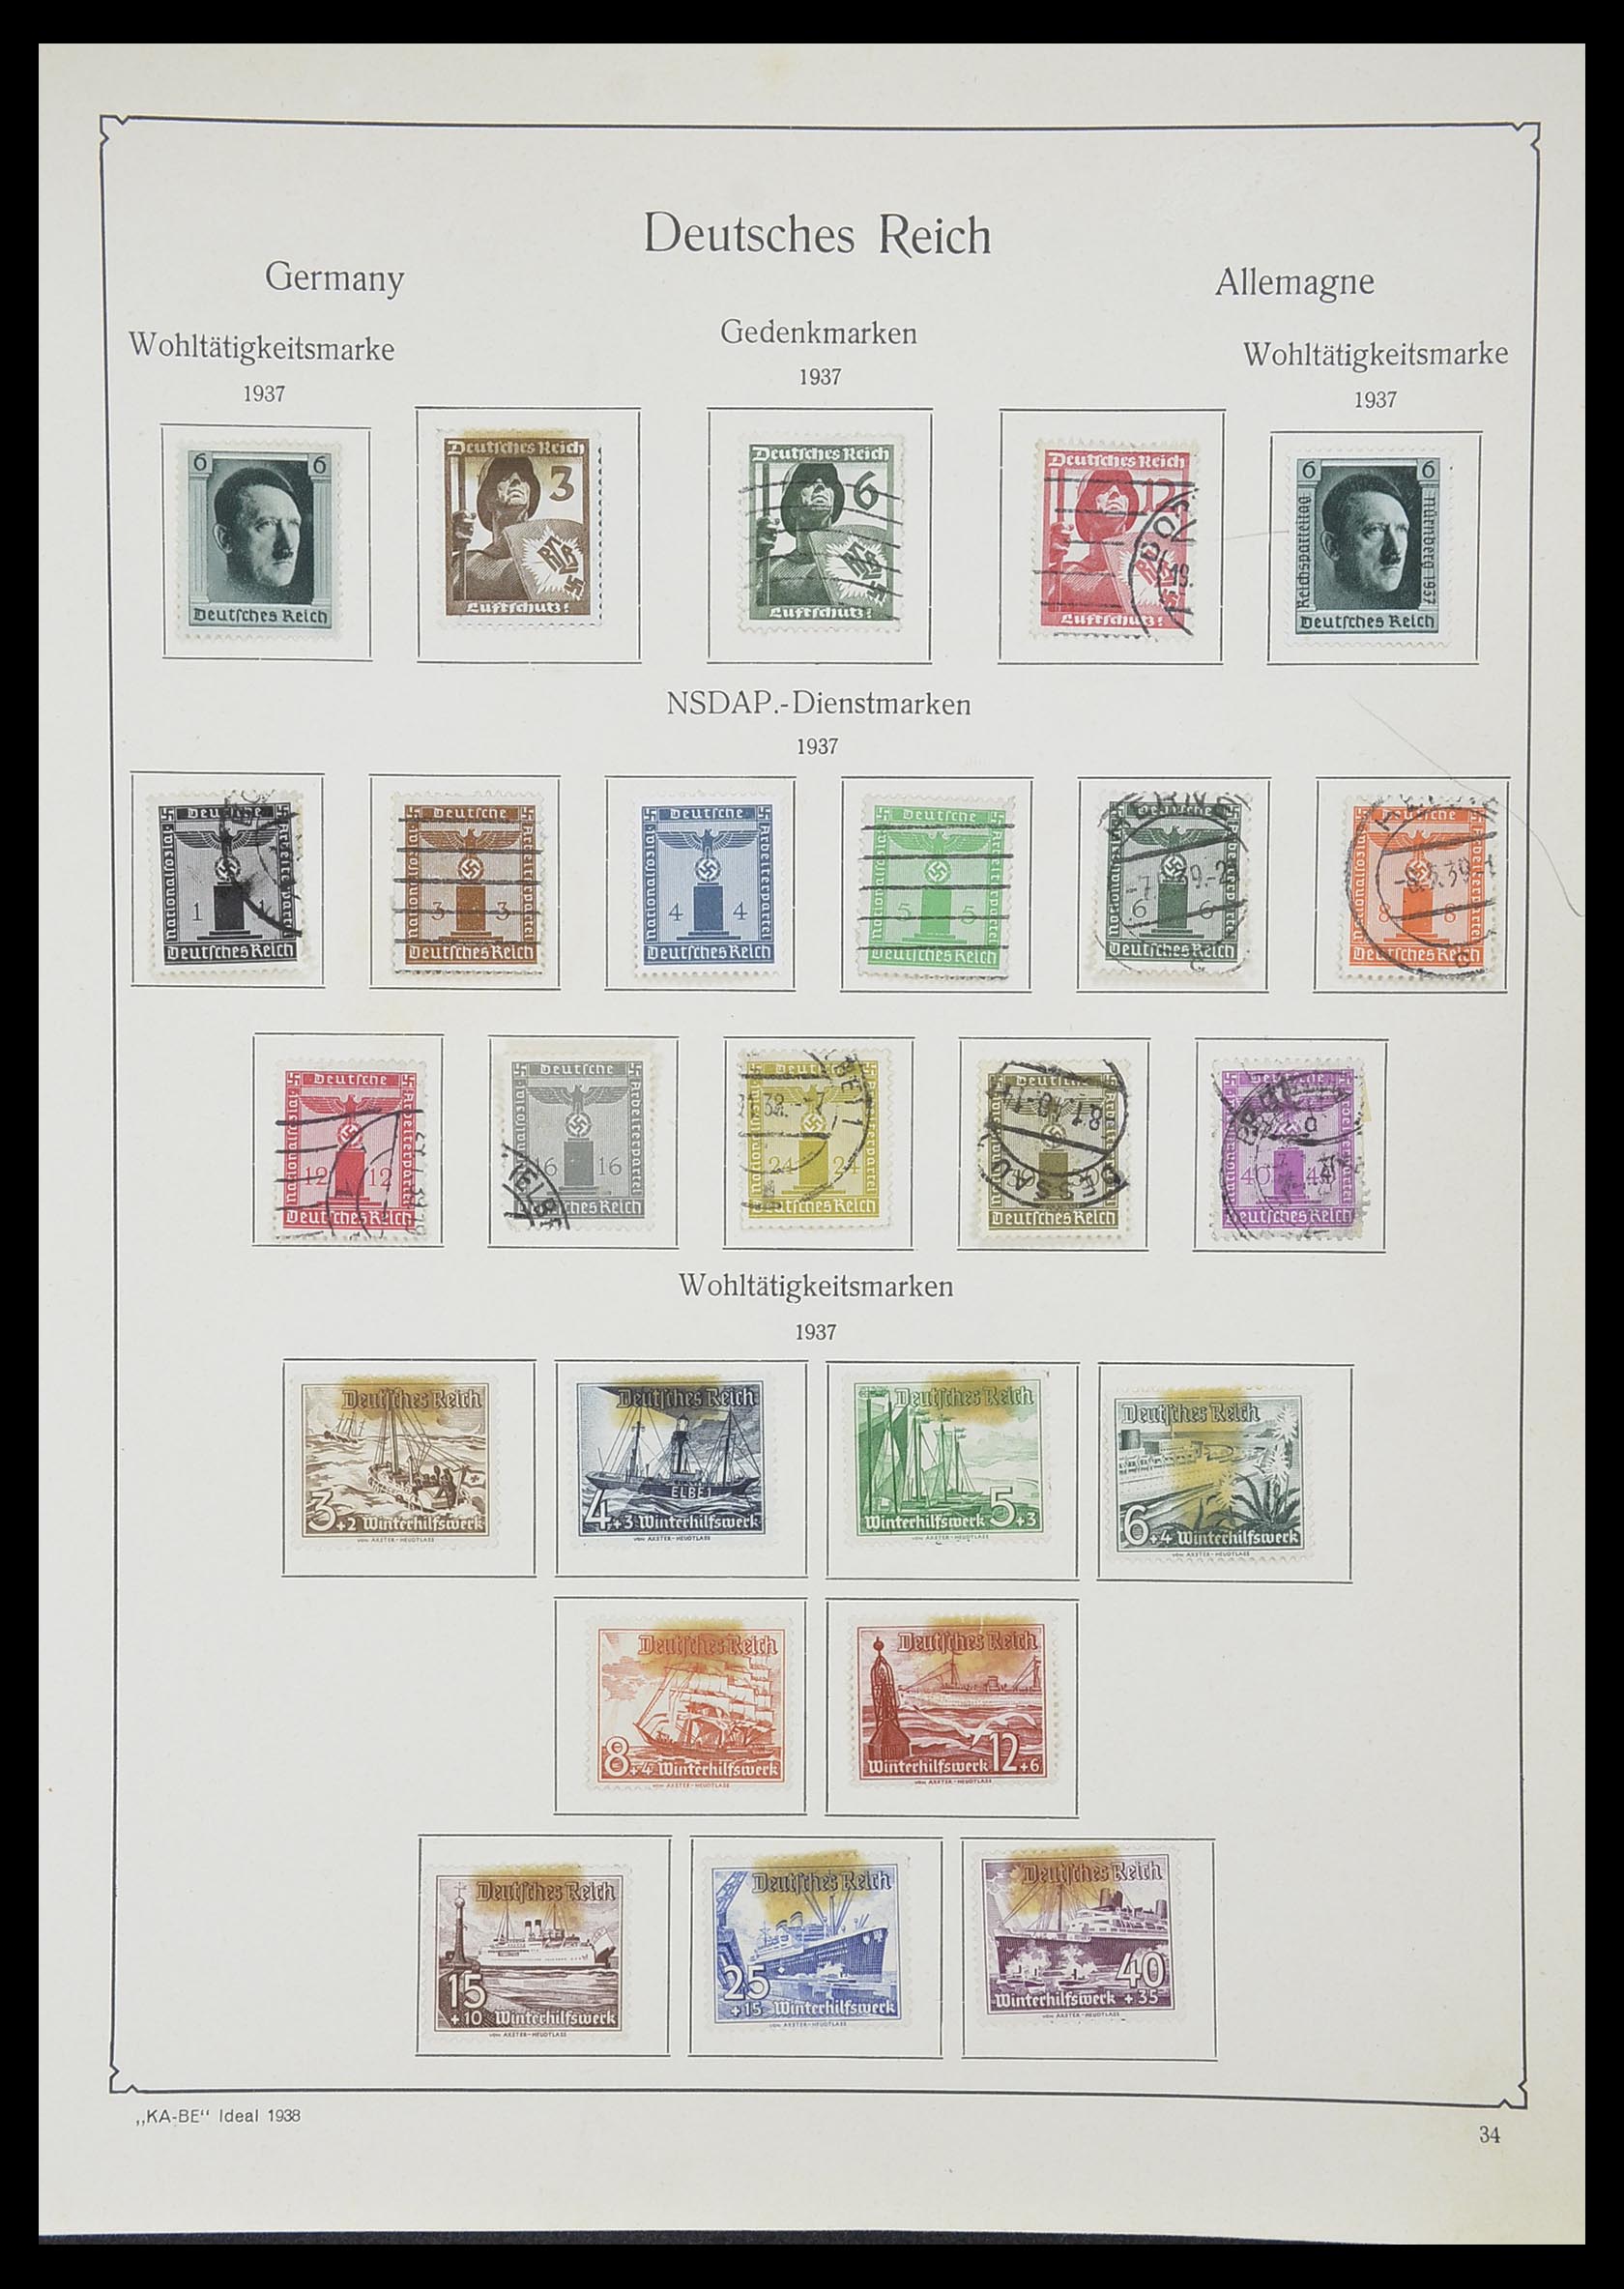 33359 042 - Stamp collection 33359 German Reich 1872-1945.